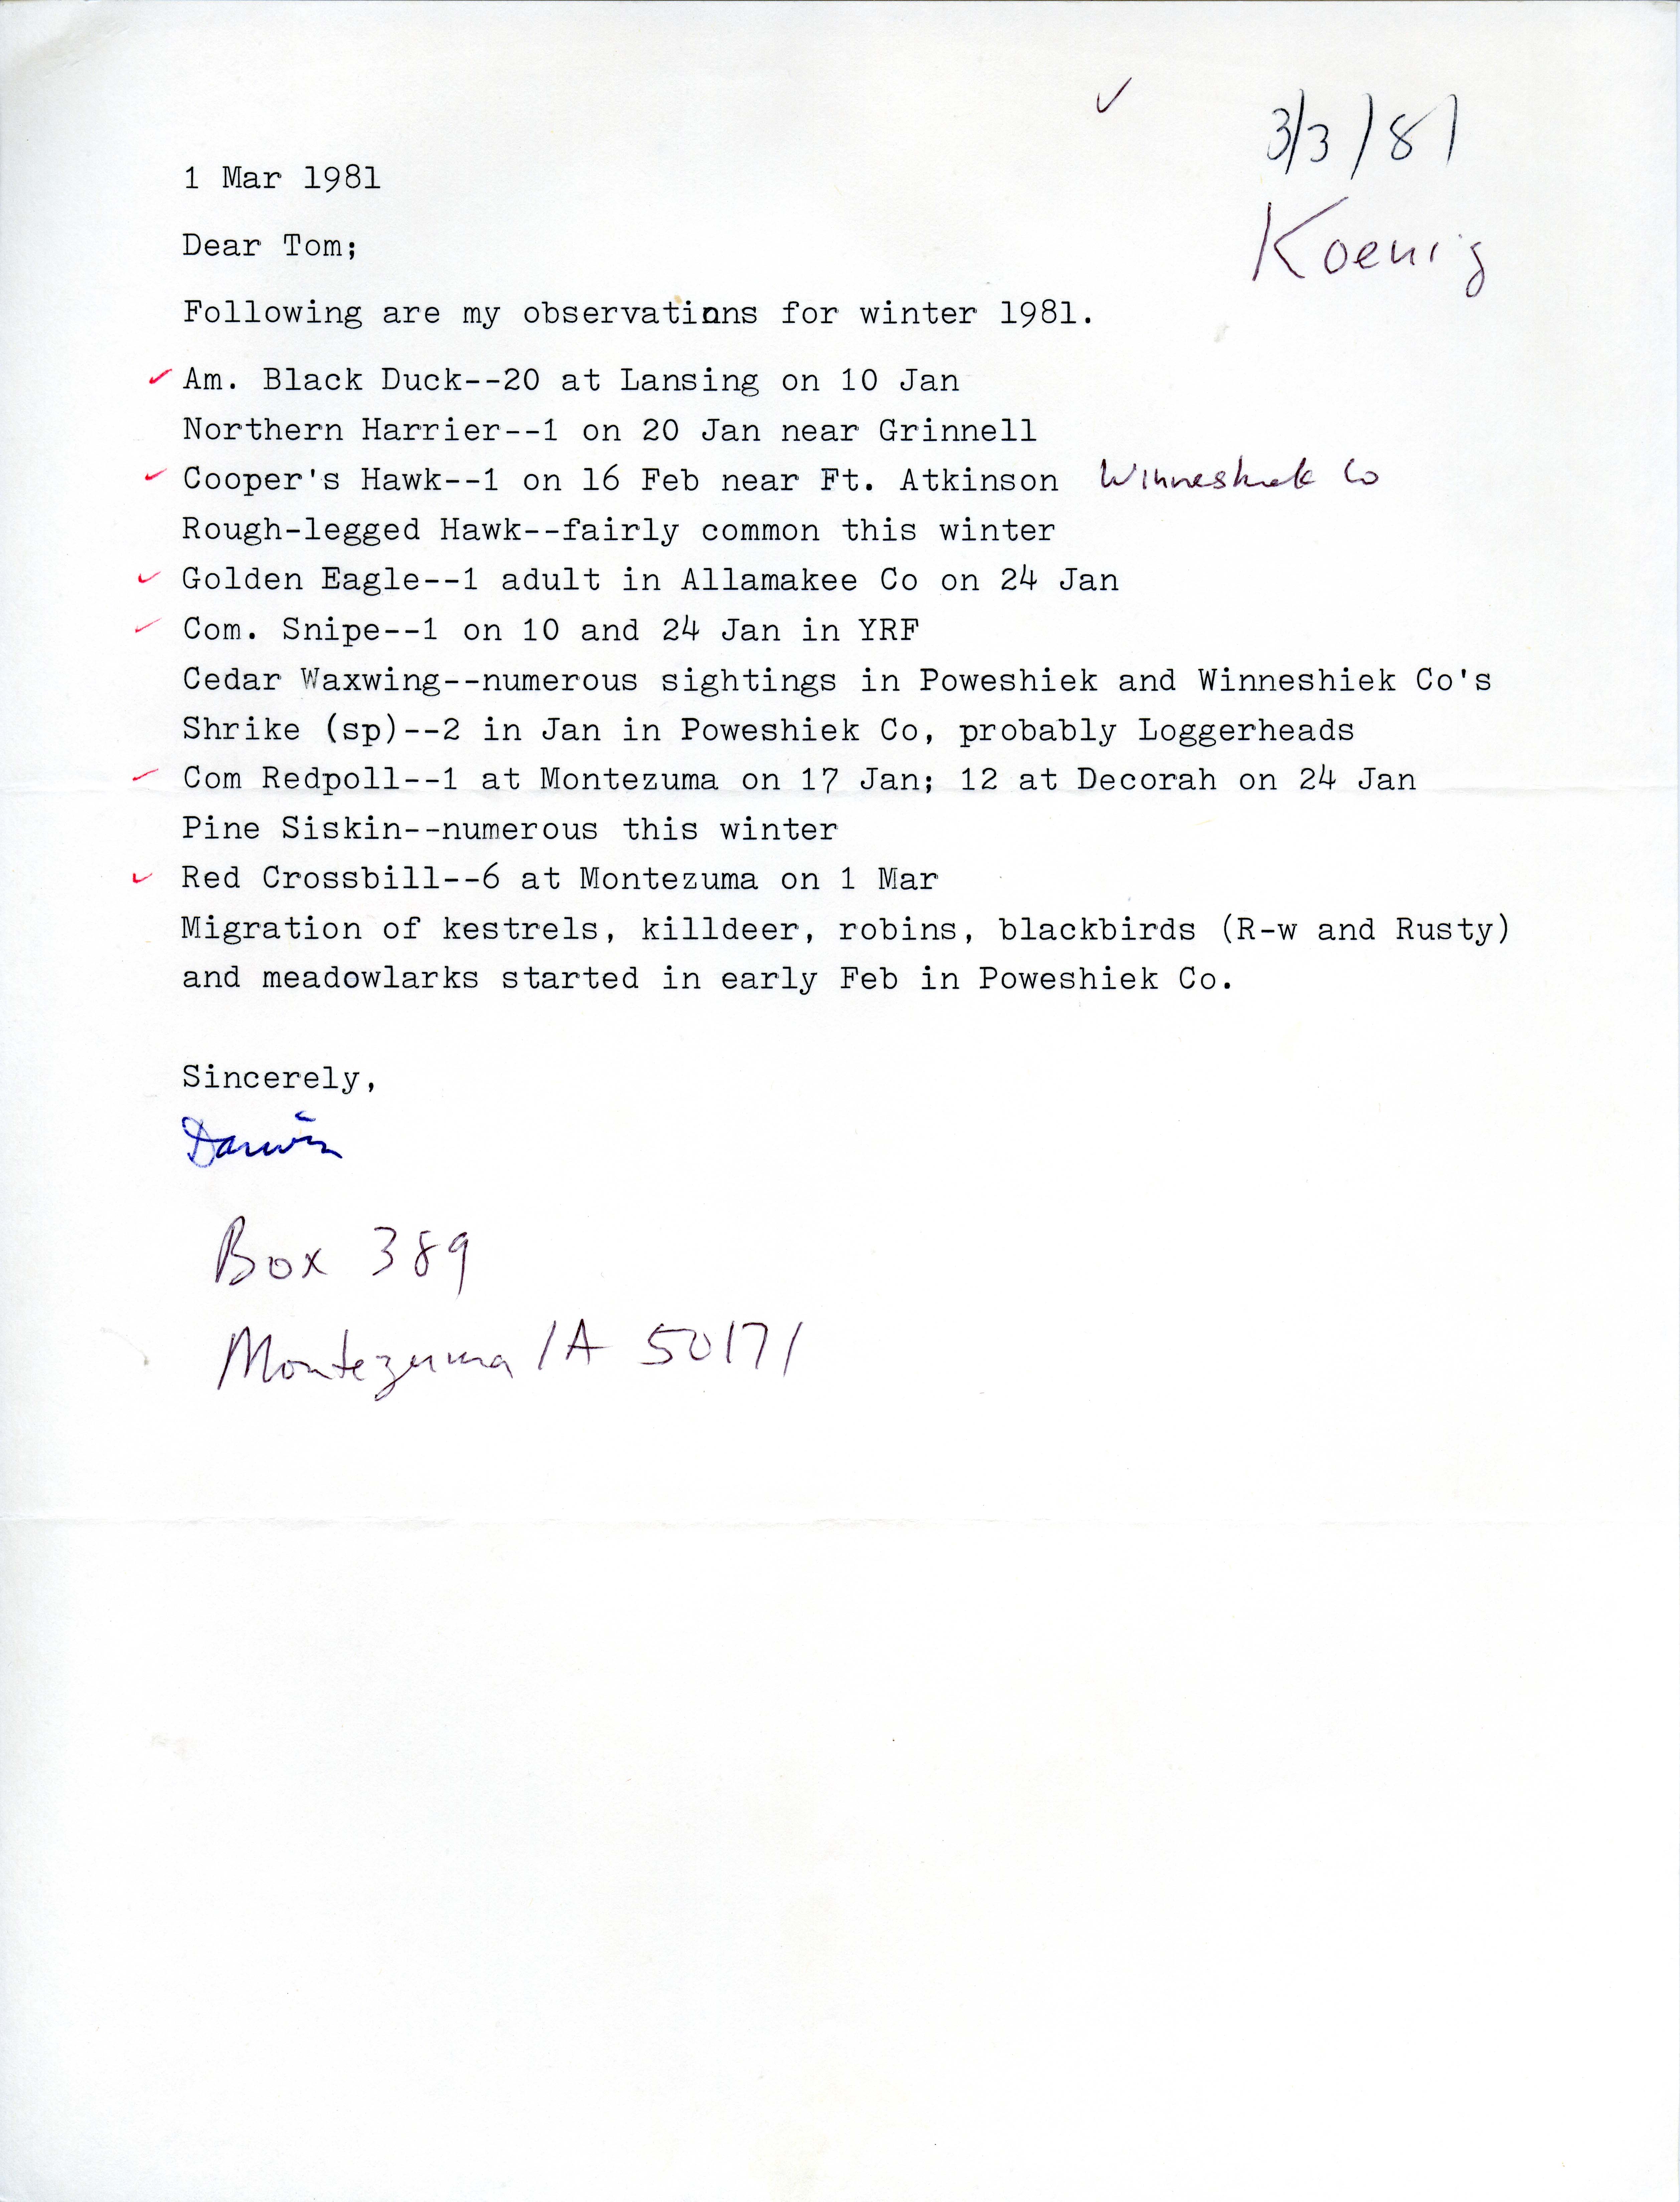 Darwin Koenig letter to Thomas Kent regarding observations for winter, March 1, 1981